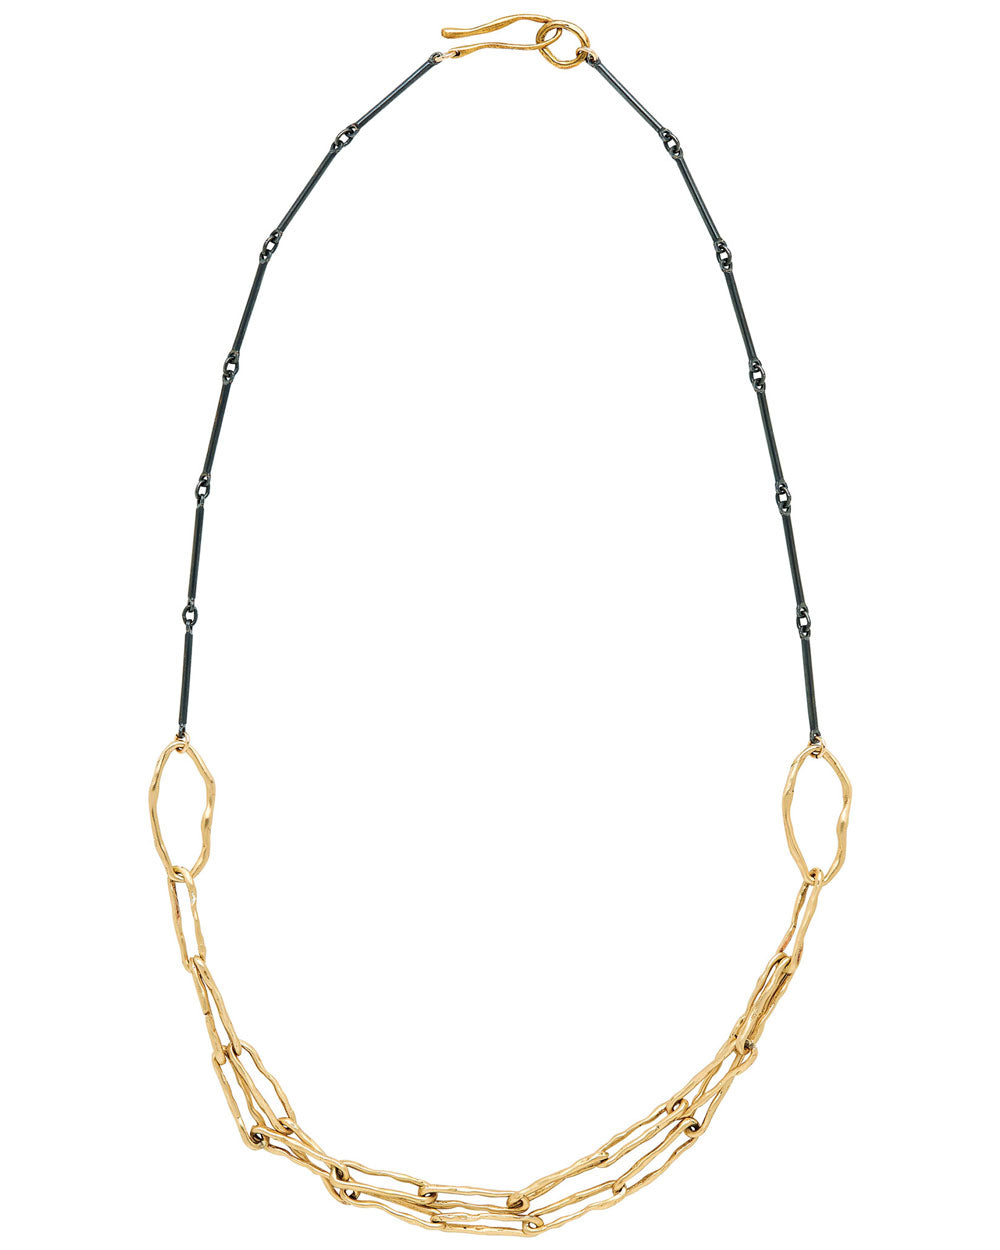 Preza Bronze and Sterling Silver Double Chain Necklace